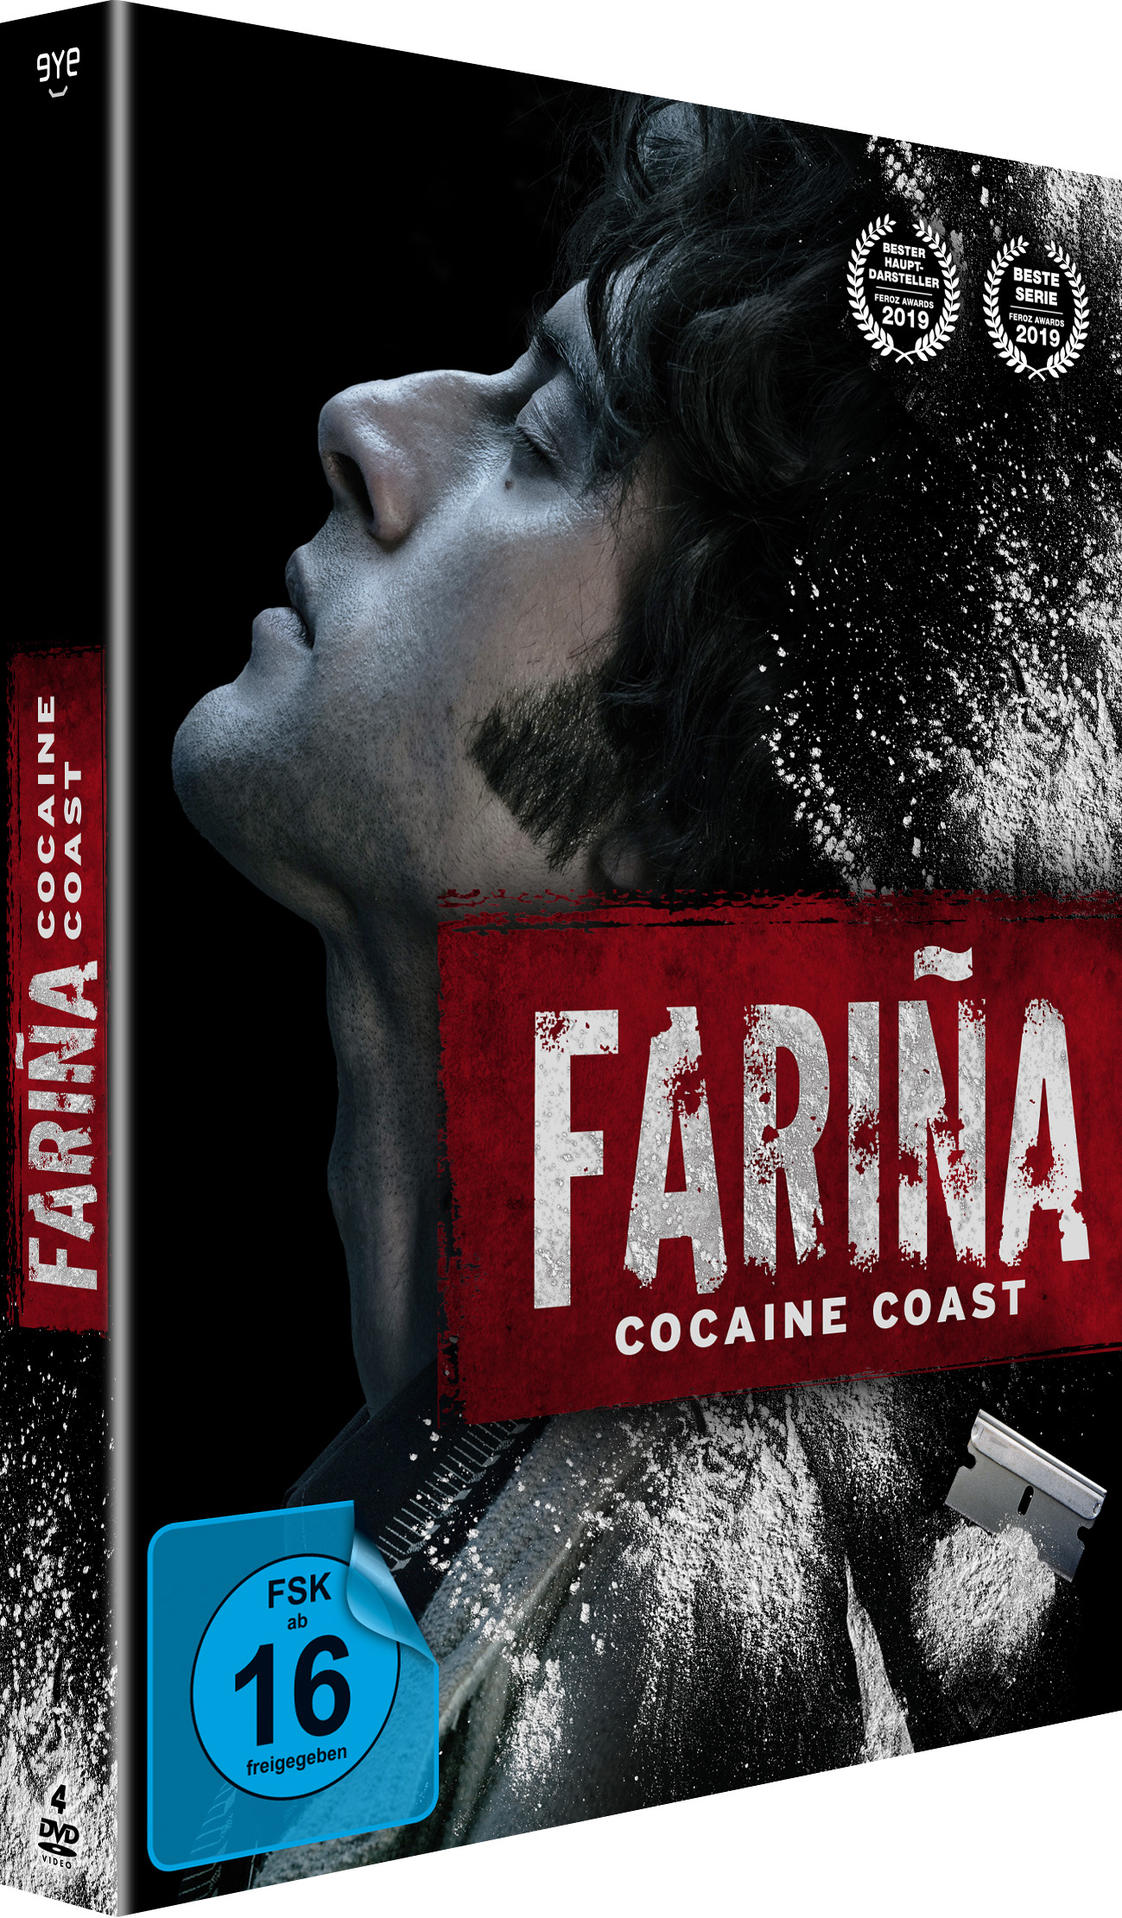 FARINA - COCAINE COAST DVD